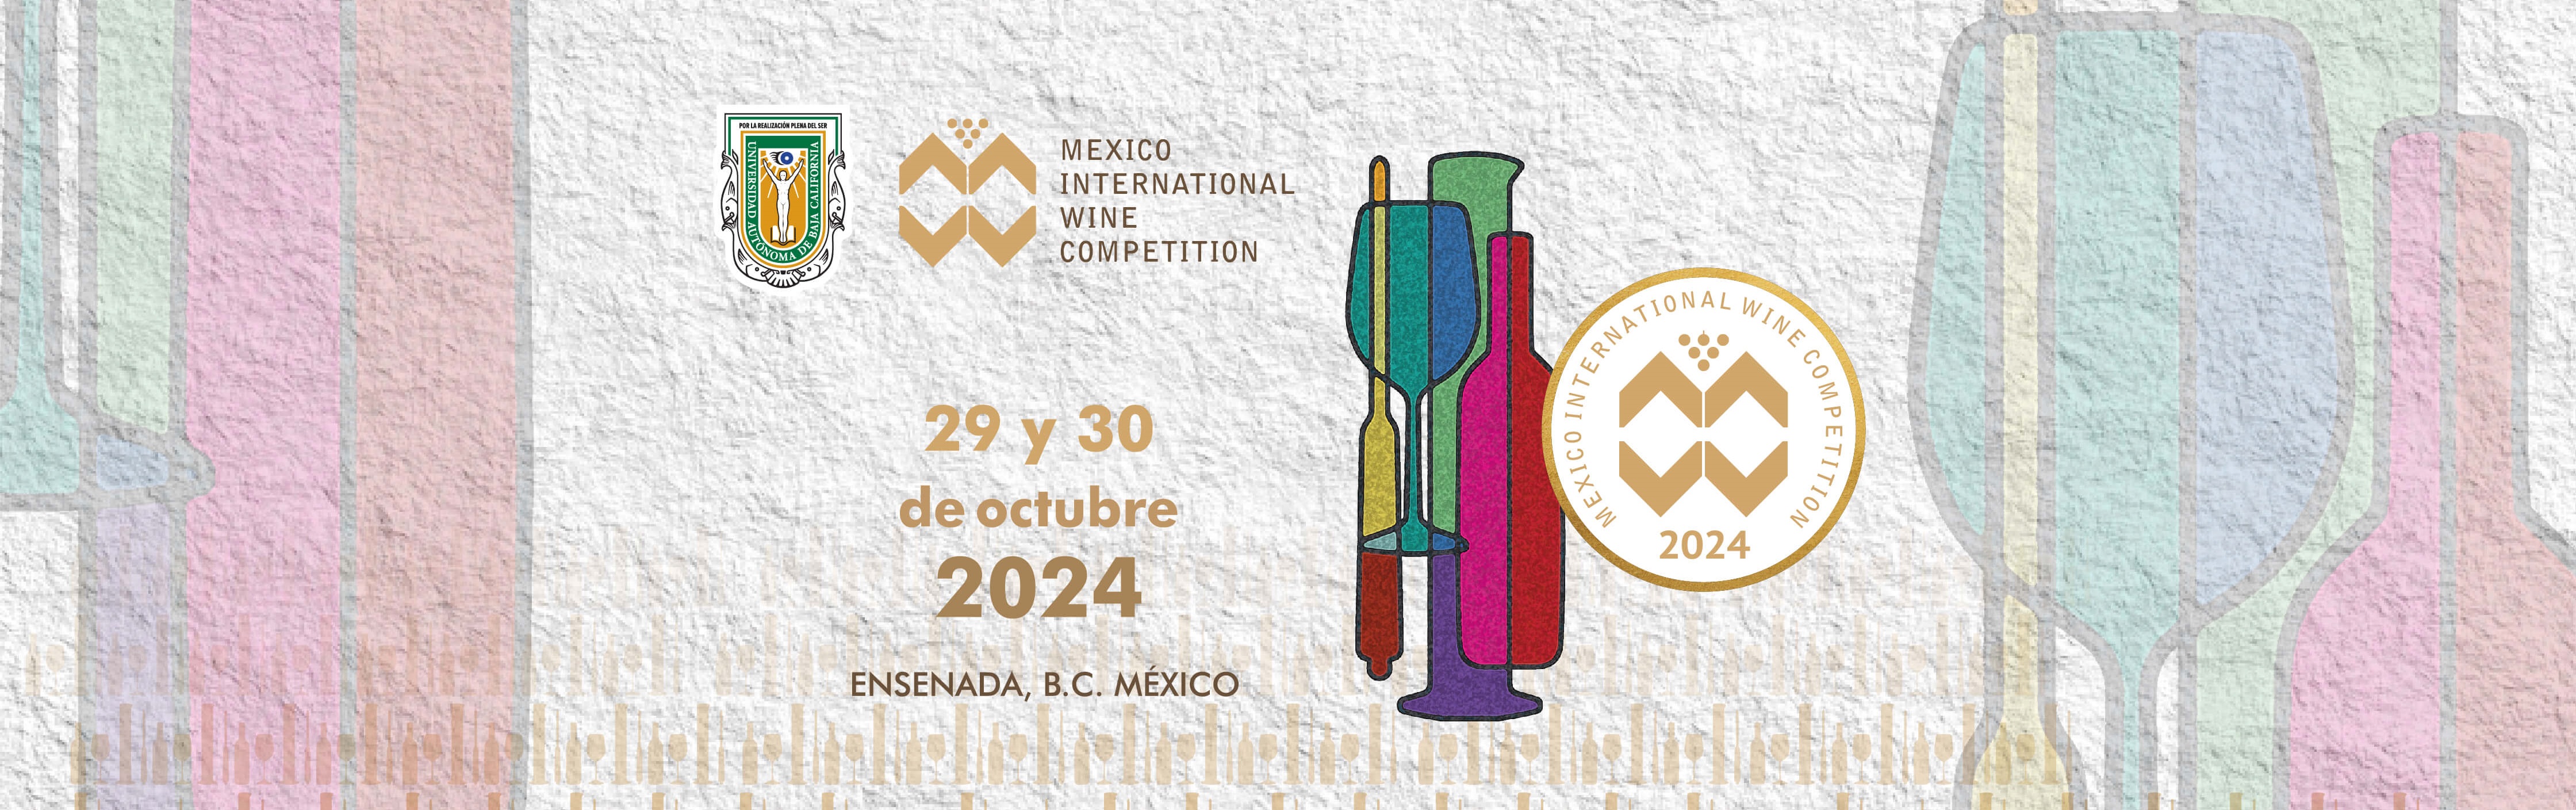 Página Oficial Mexico International Wine Competition 2024